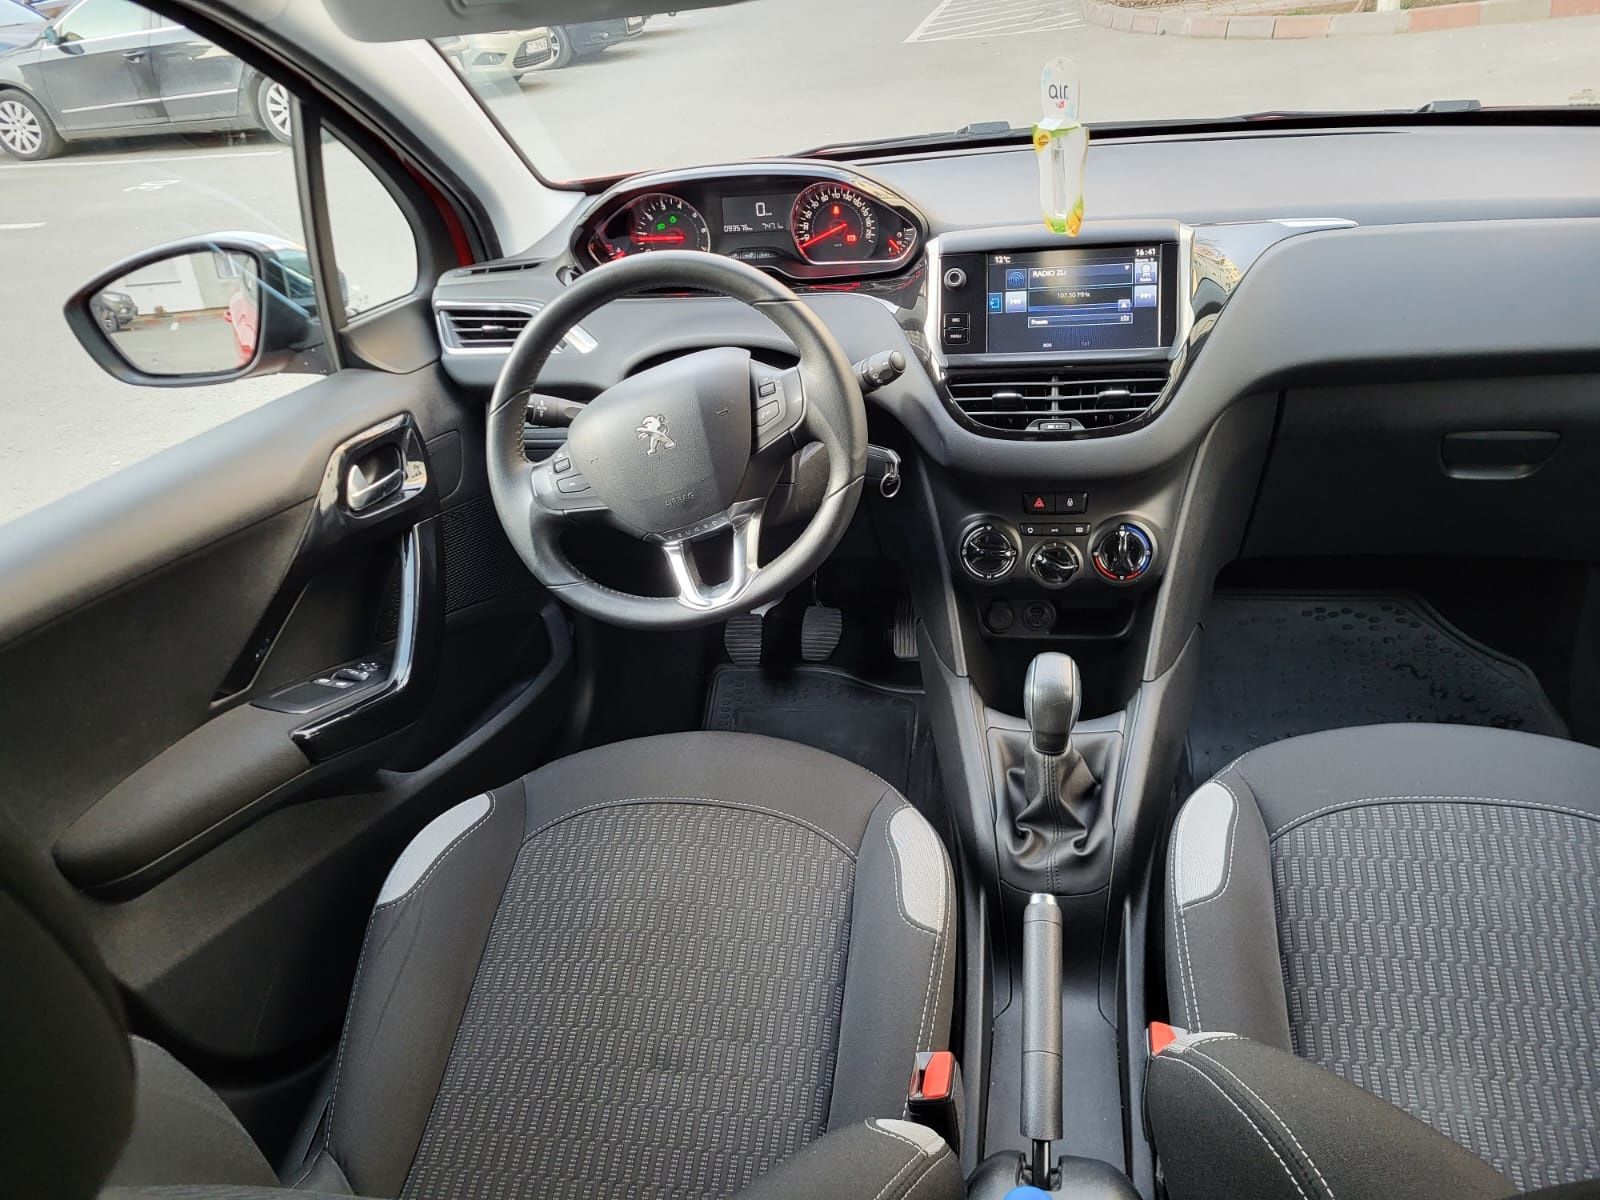 De vânzare RAR EFECTUAT Peugeot 208 STYLE 2015 1.2/82 cp benzina